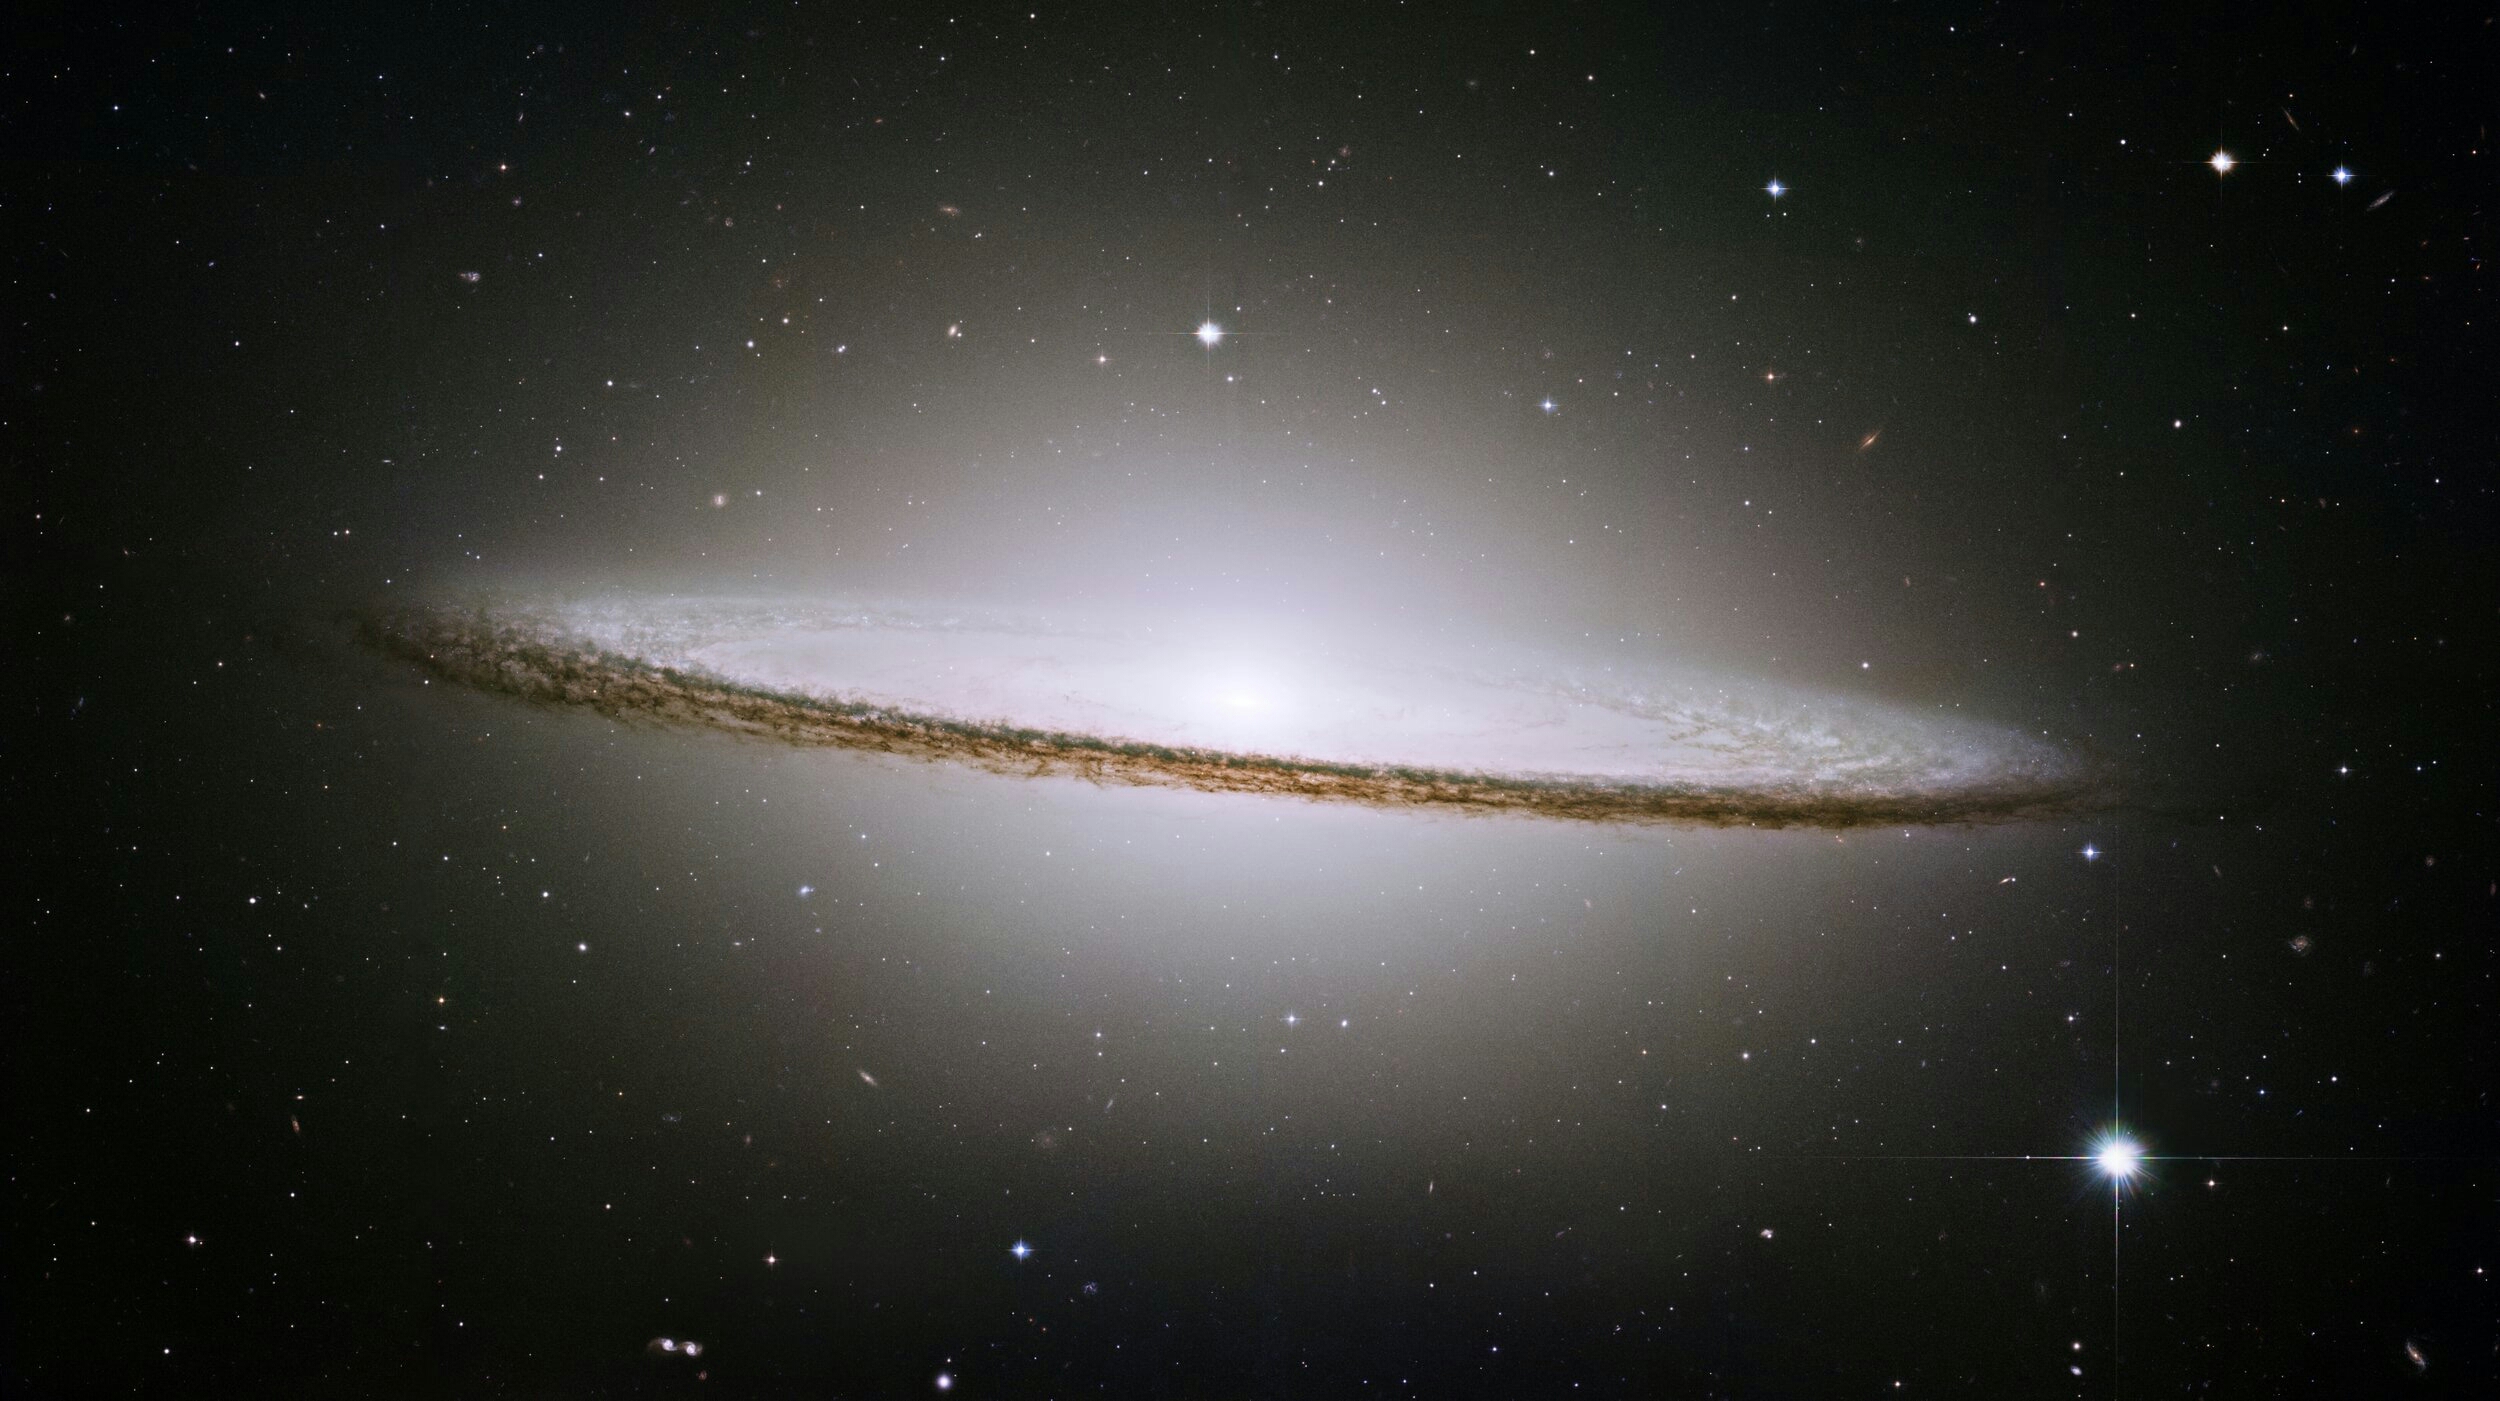 Galaktyka Ngc 4594 M104